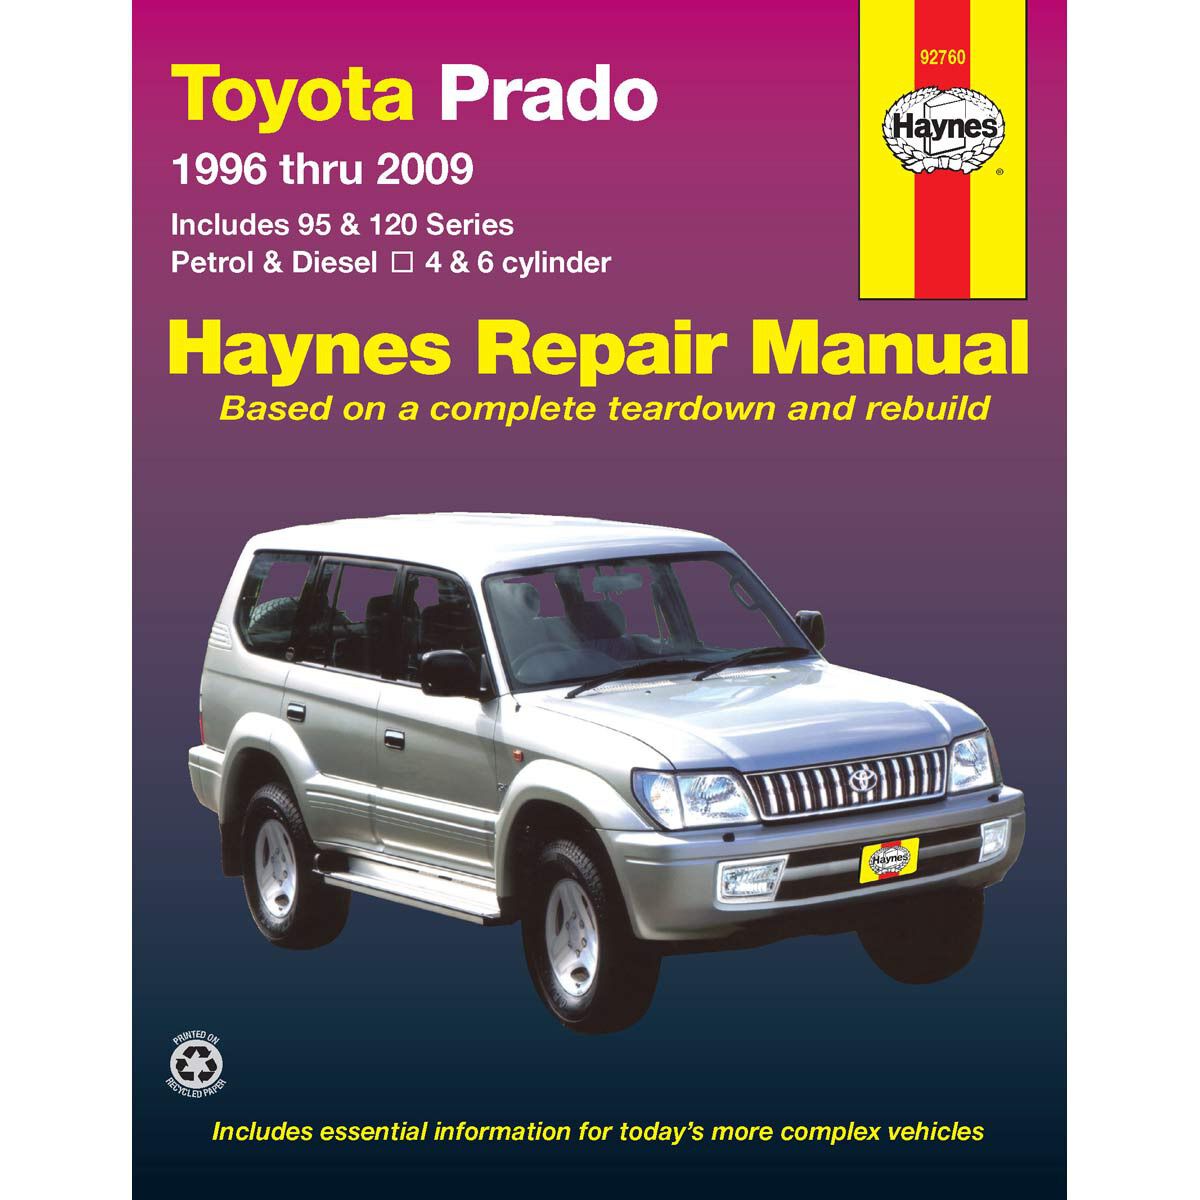 Haynes Car Manual For Toyota Prado 1996-2009 - 92760, , scaau_hi-res